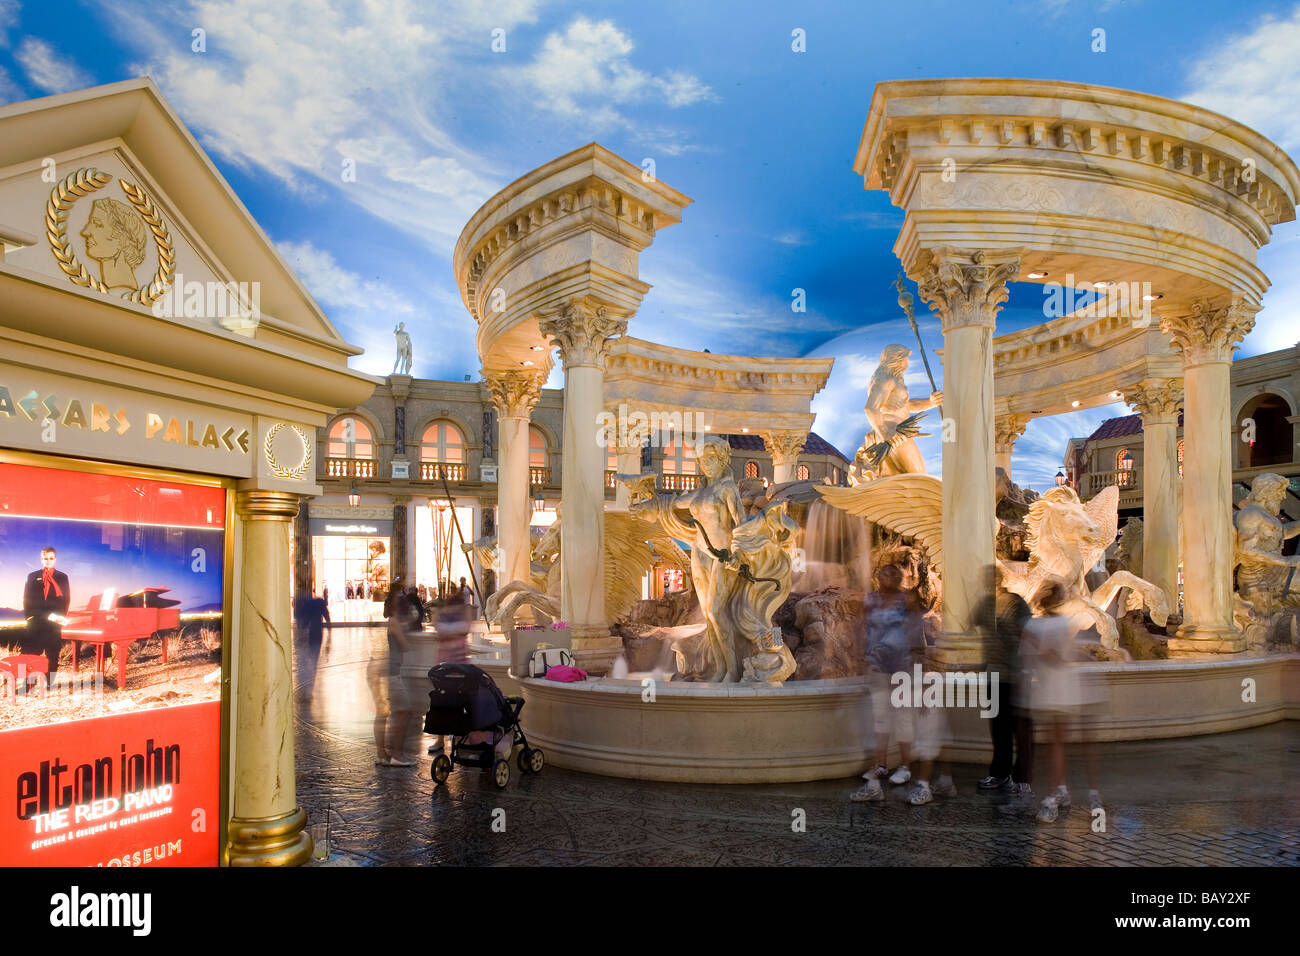 Inside The Forum Shops Luxury Shopping Mall at Caesars Palace, Las Vegas  Stock Photo - Alamy